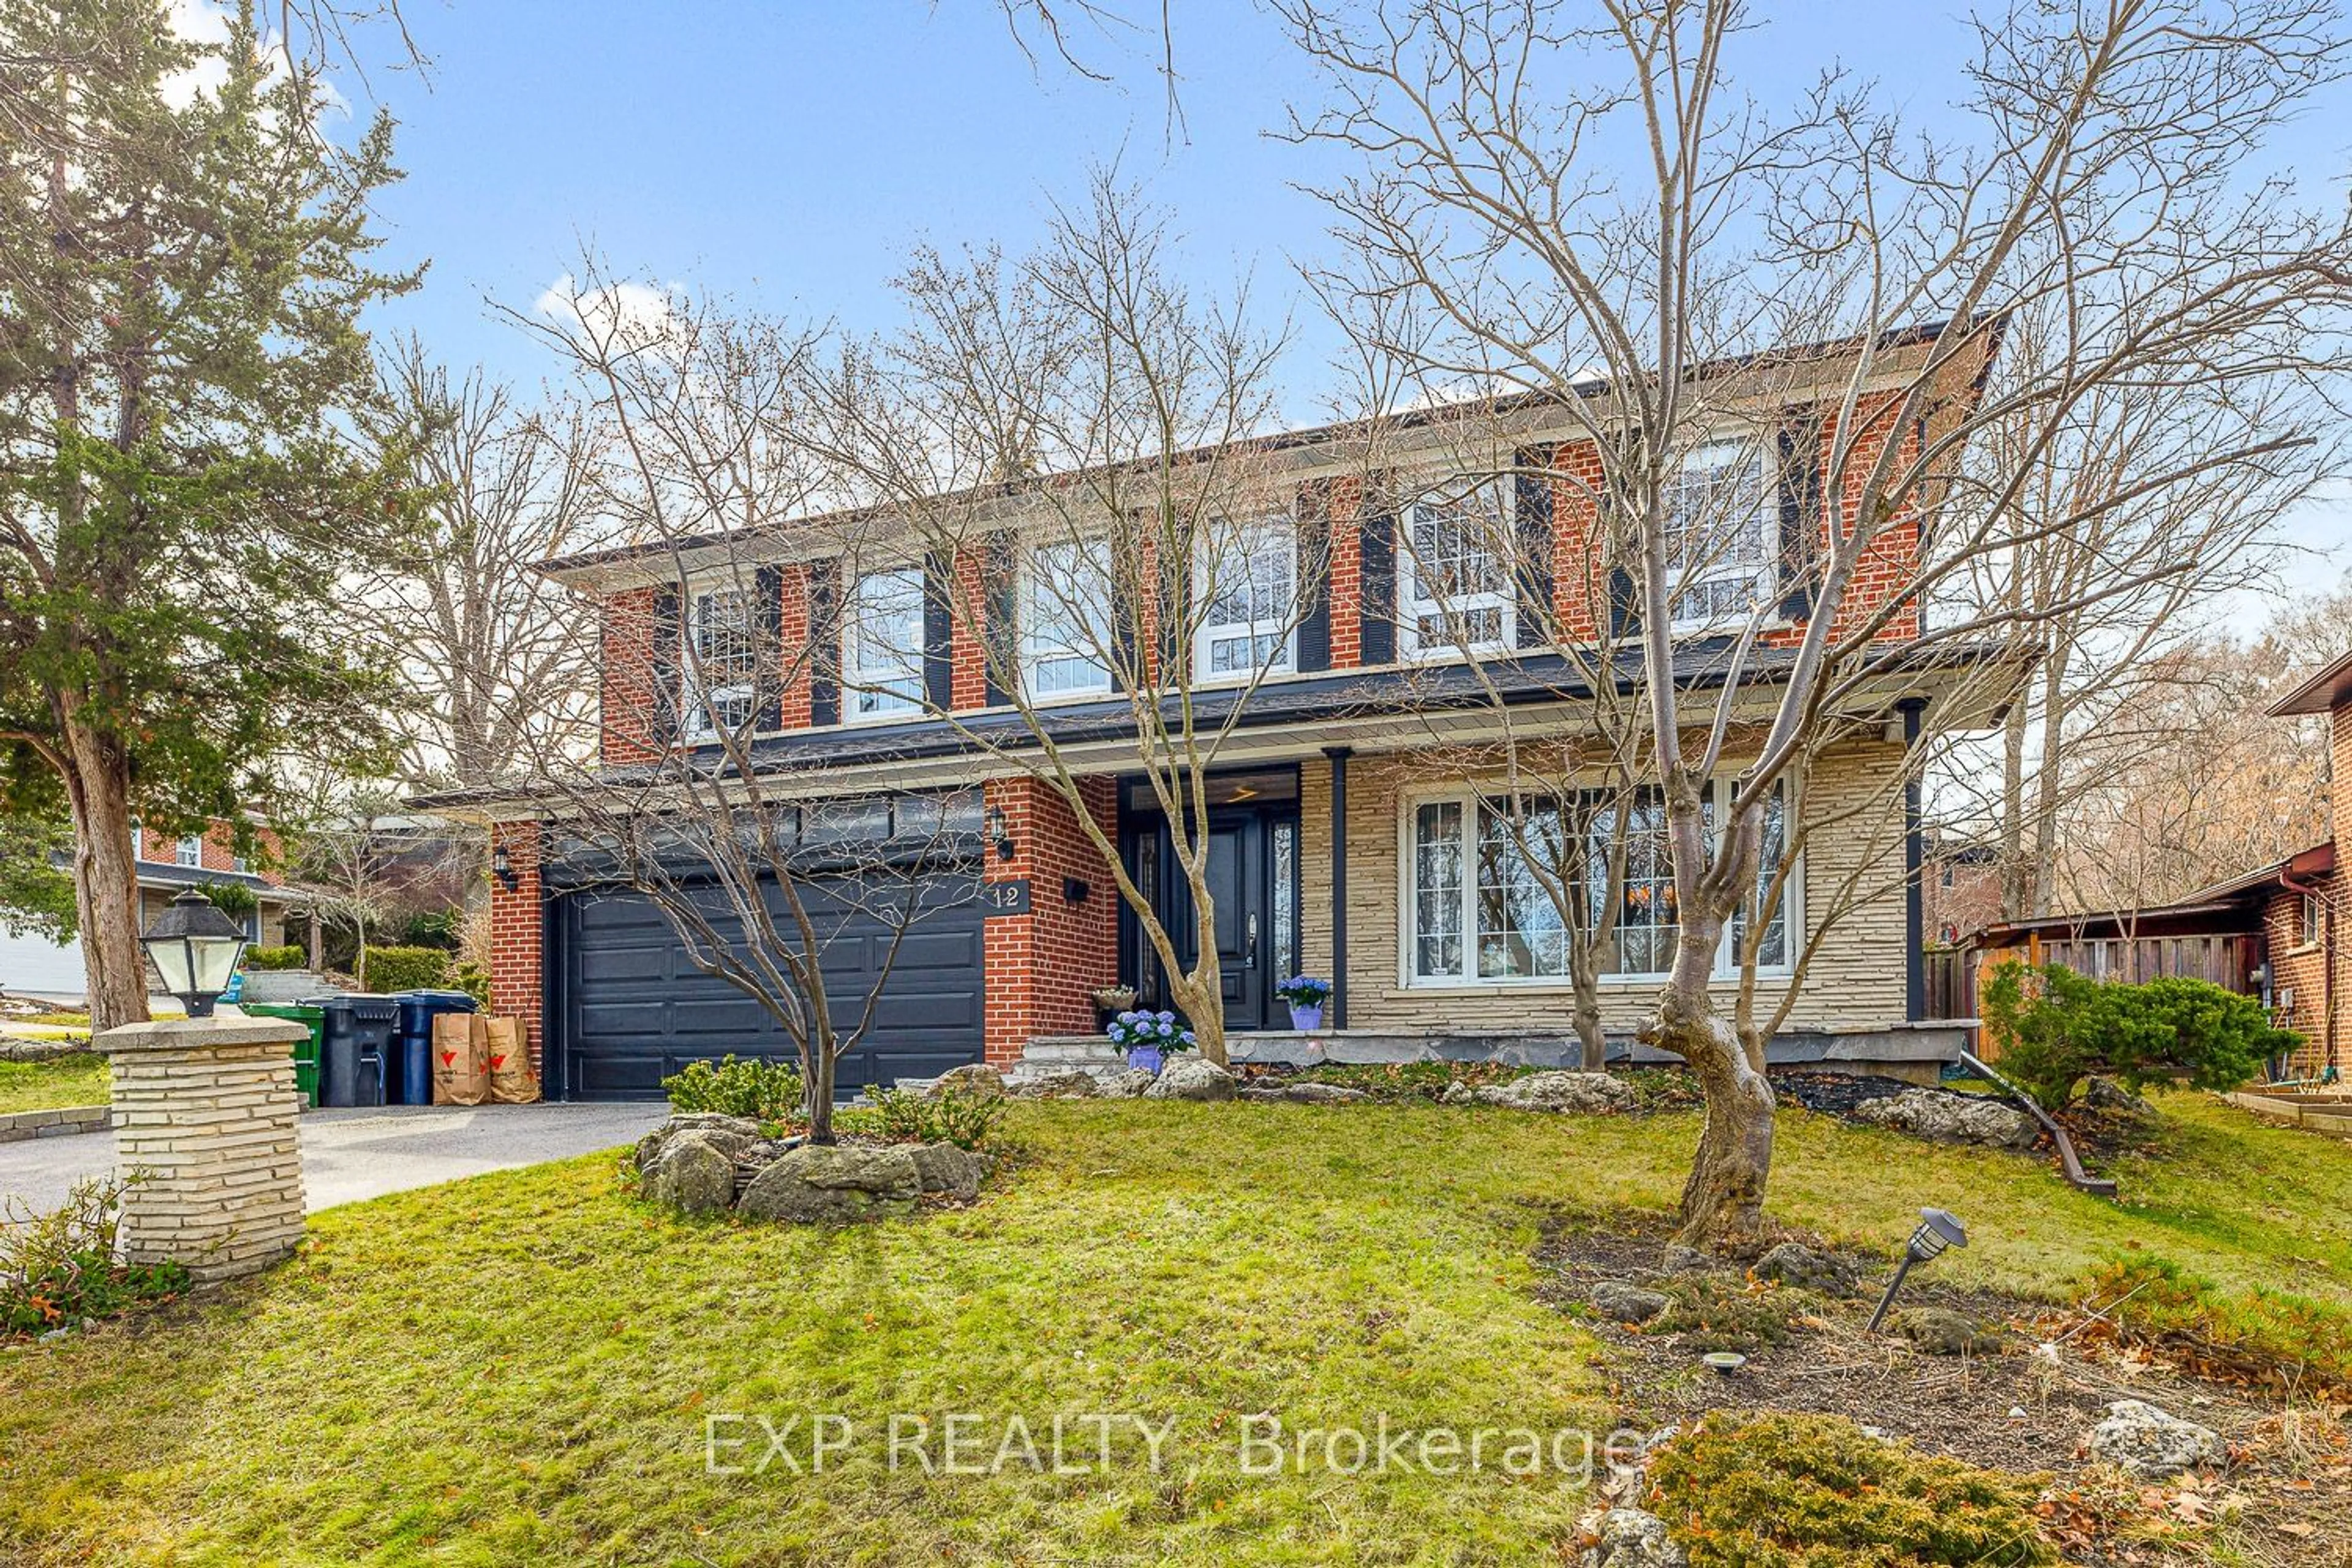 Home with brick exterior material for 12 Beardmore Cres, Toronto Ontario M2K 2P5